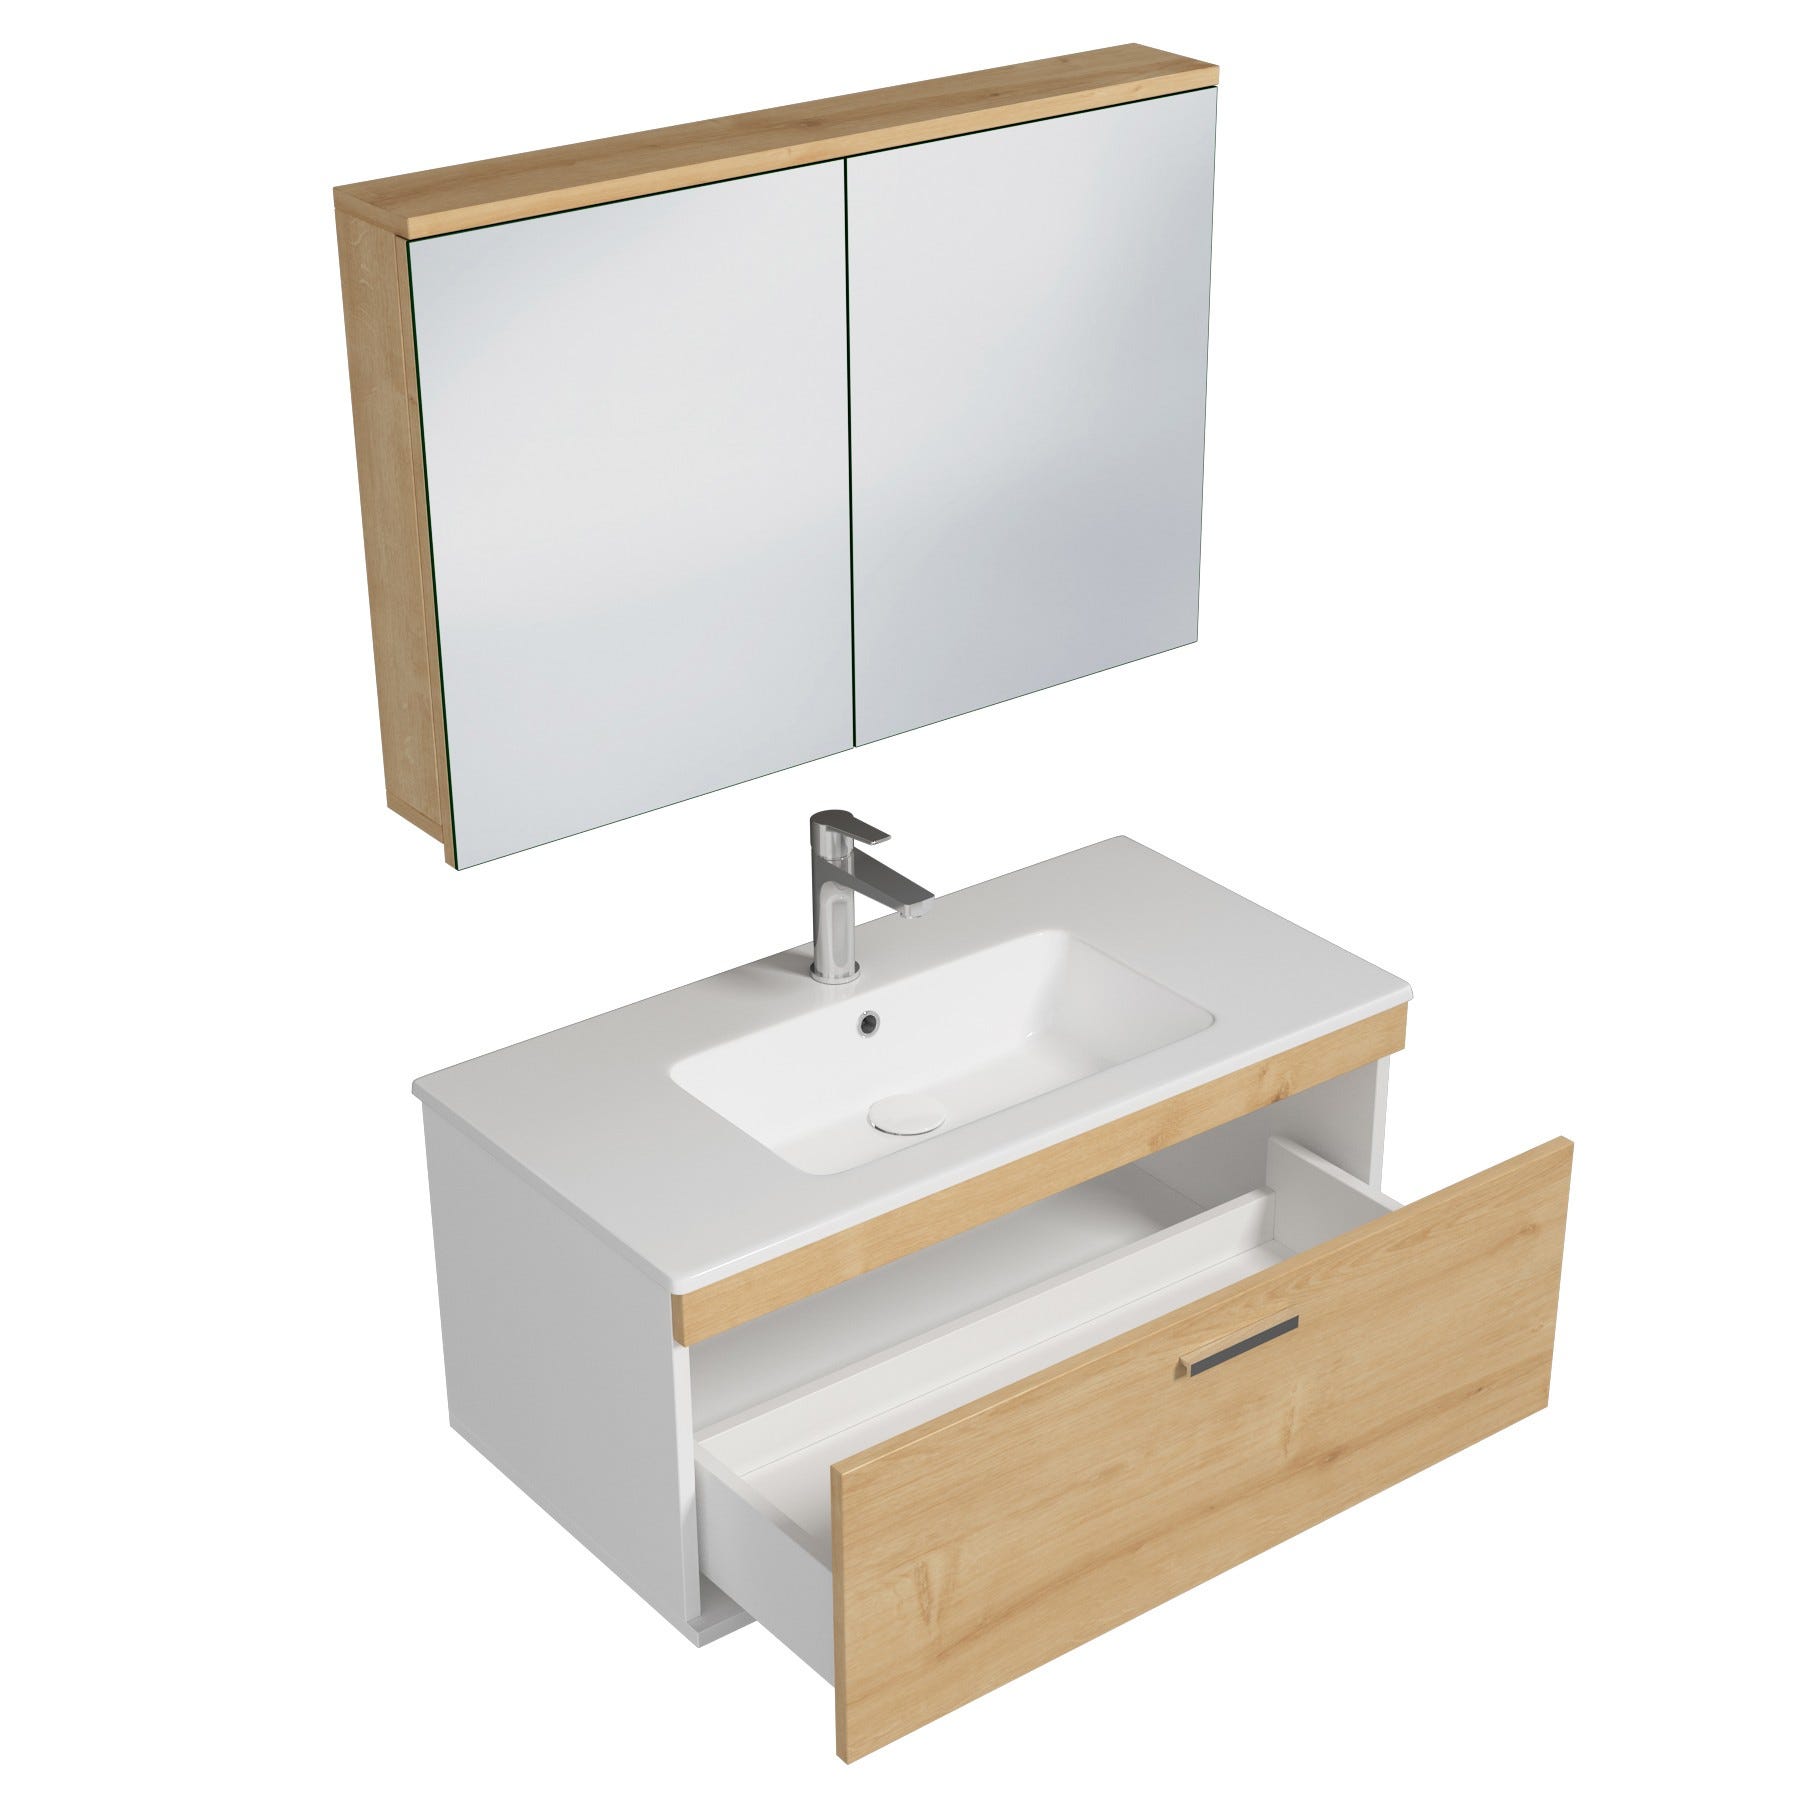 RUBITE Meuble salle de bain simple vasque 1 tiroir chêne clair largeur 90 cm + miroir armoire 1